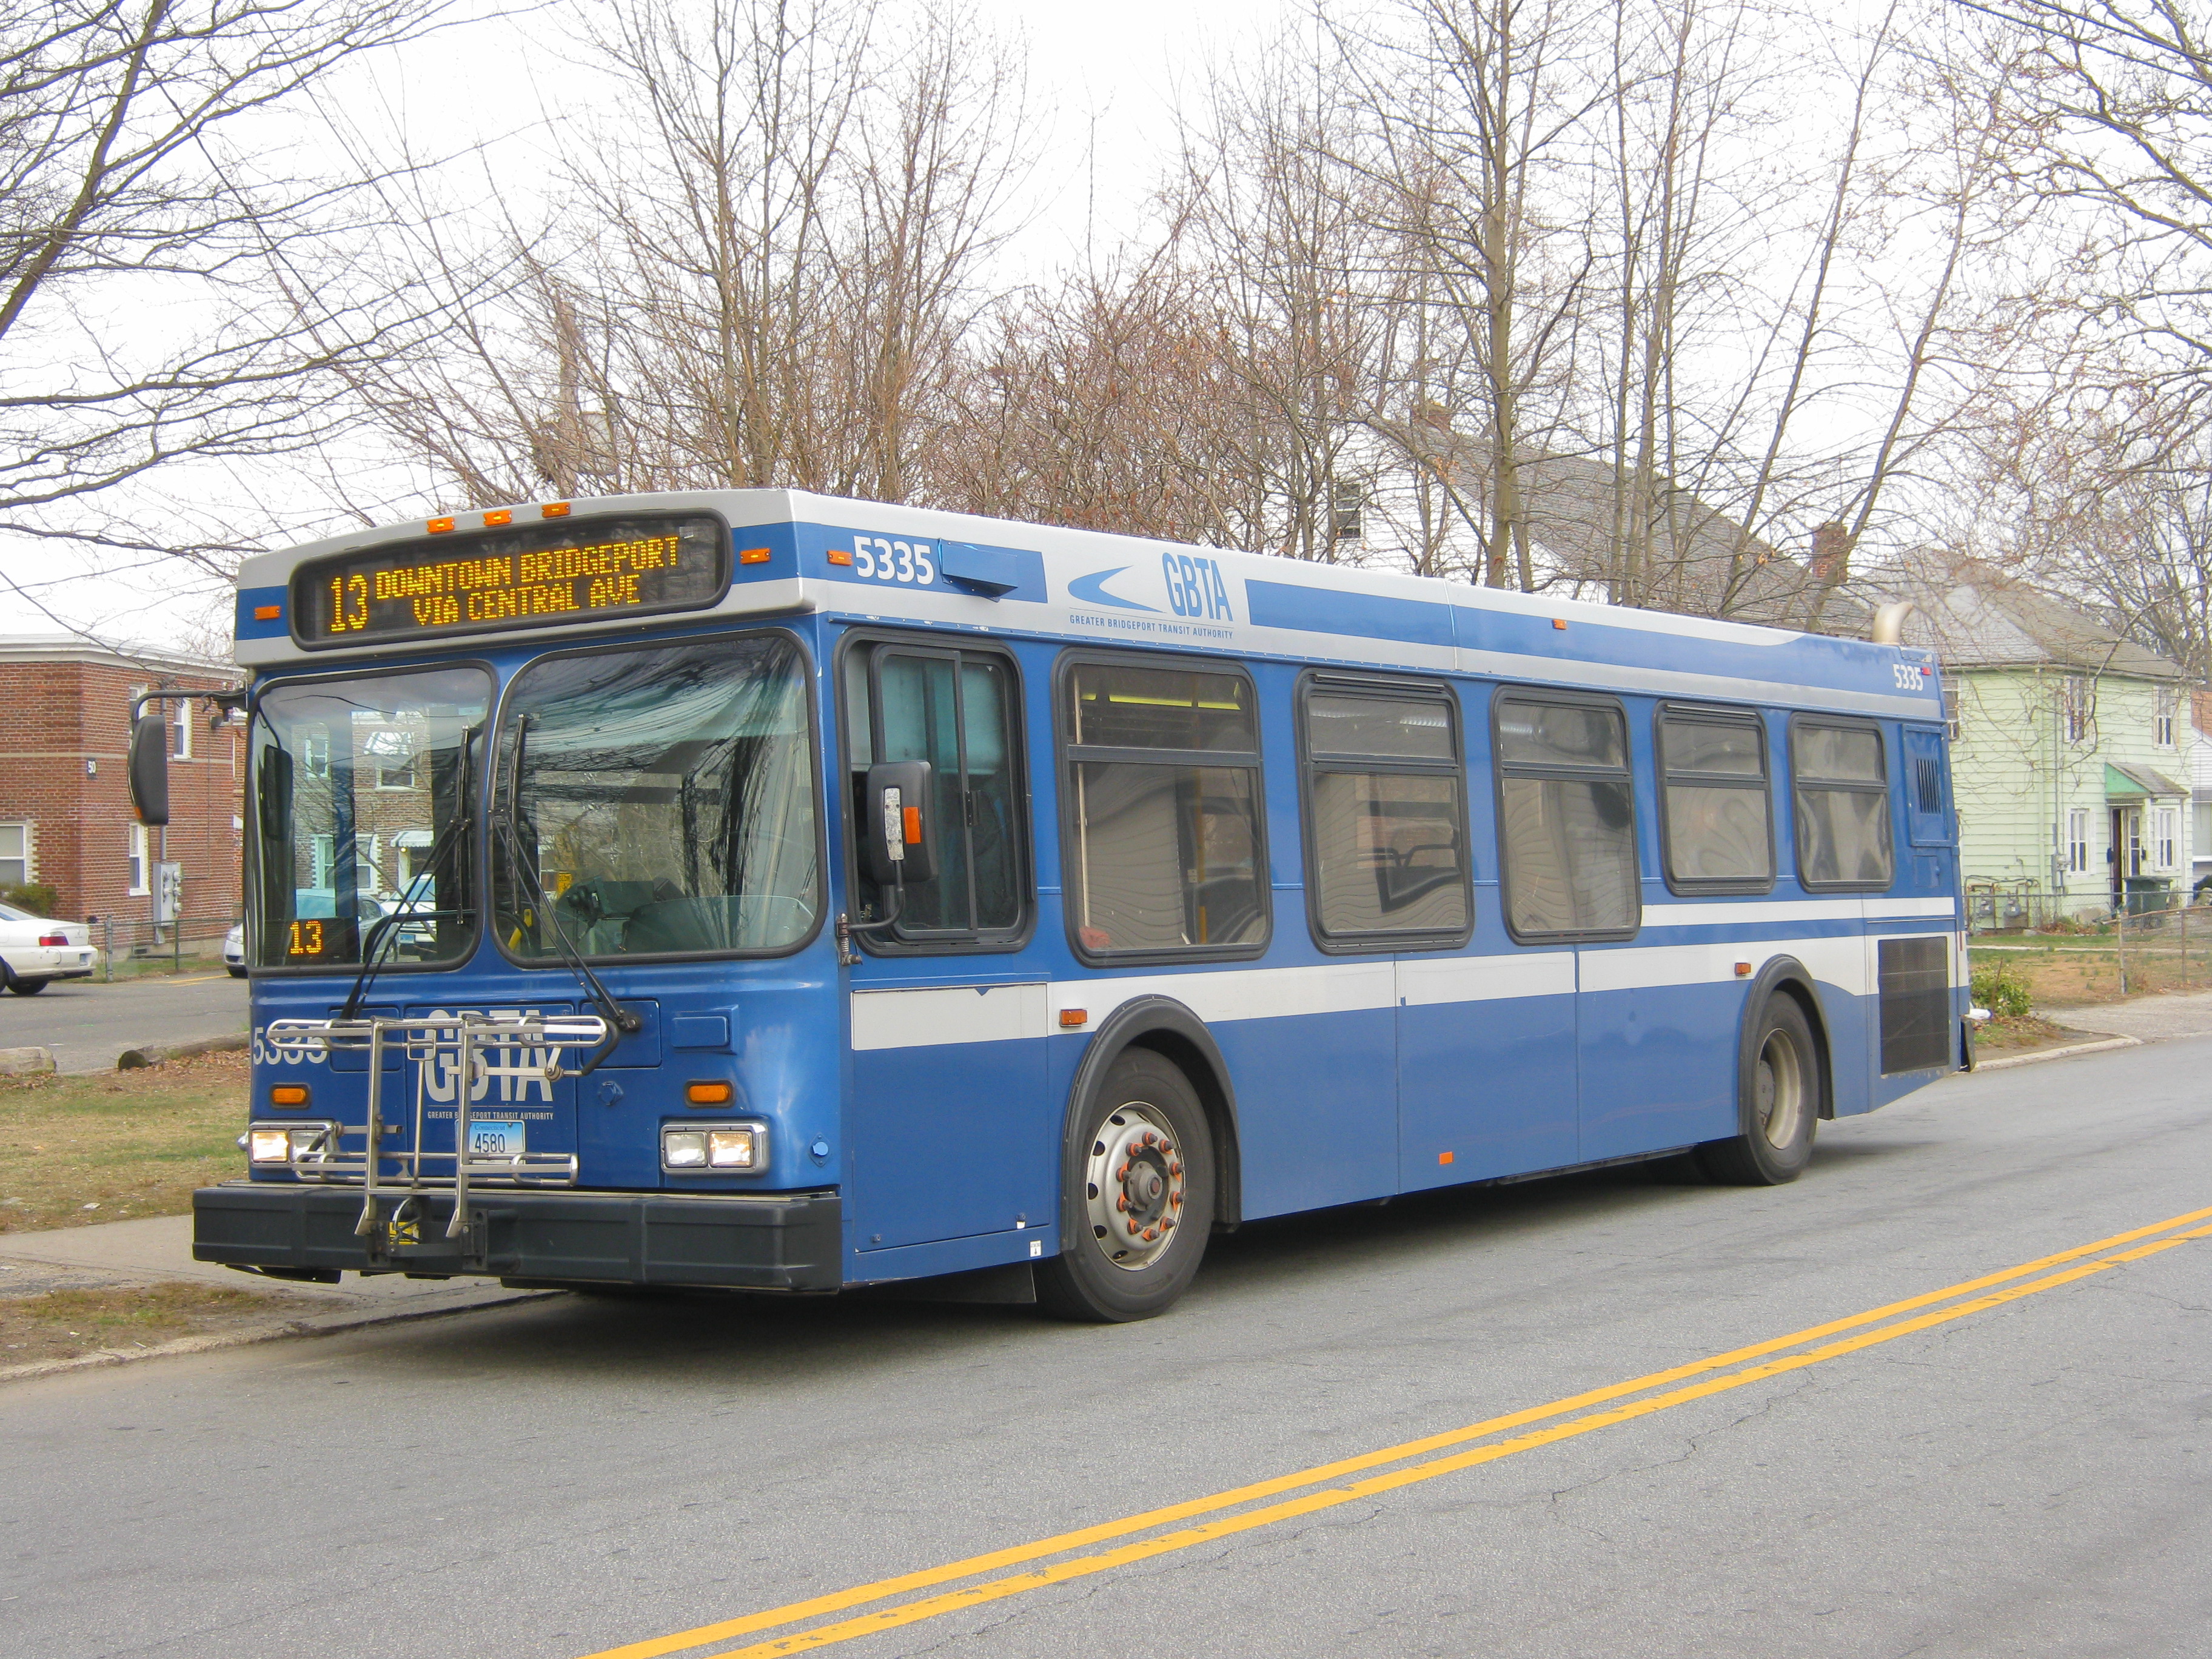 File:Greater Bridgeport Transit 5335.jpg - Wikipedia